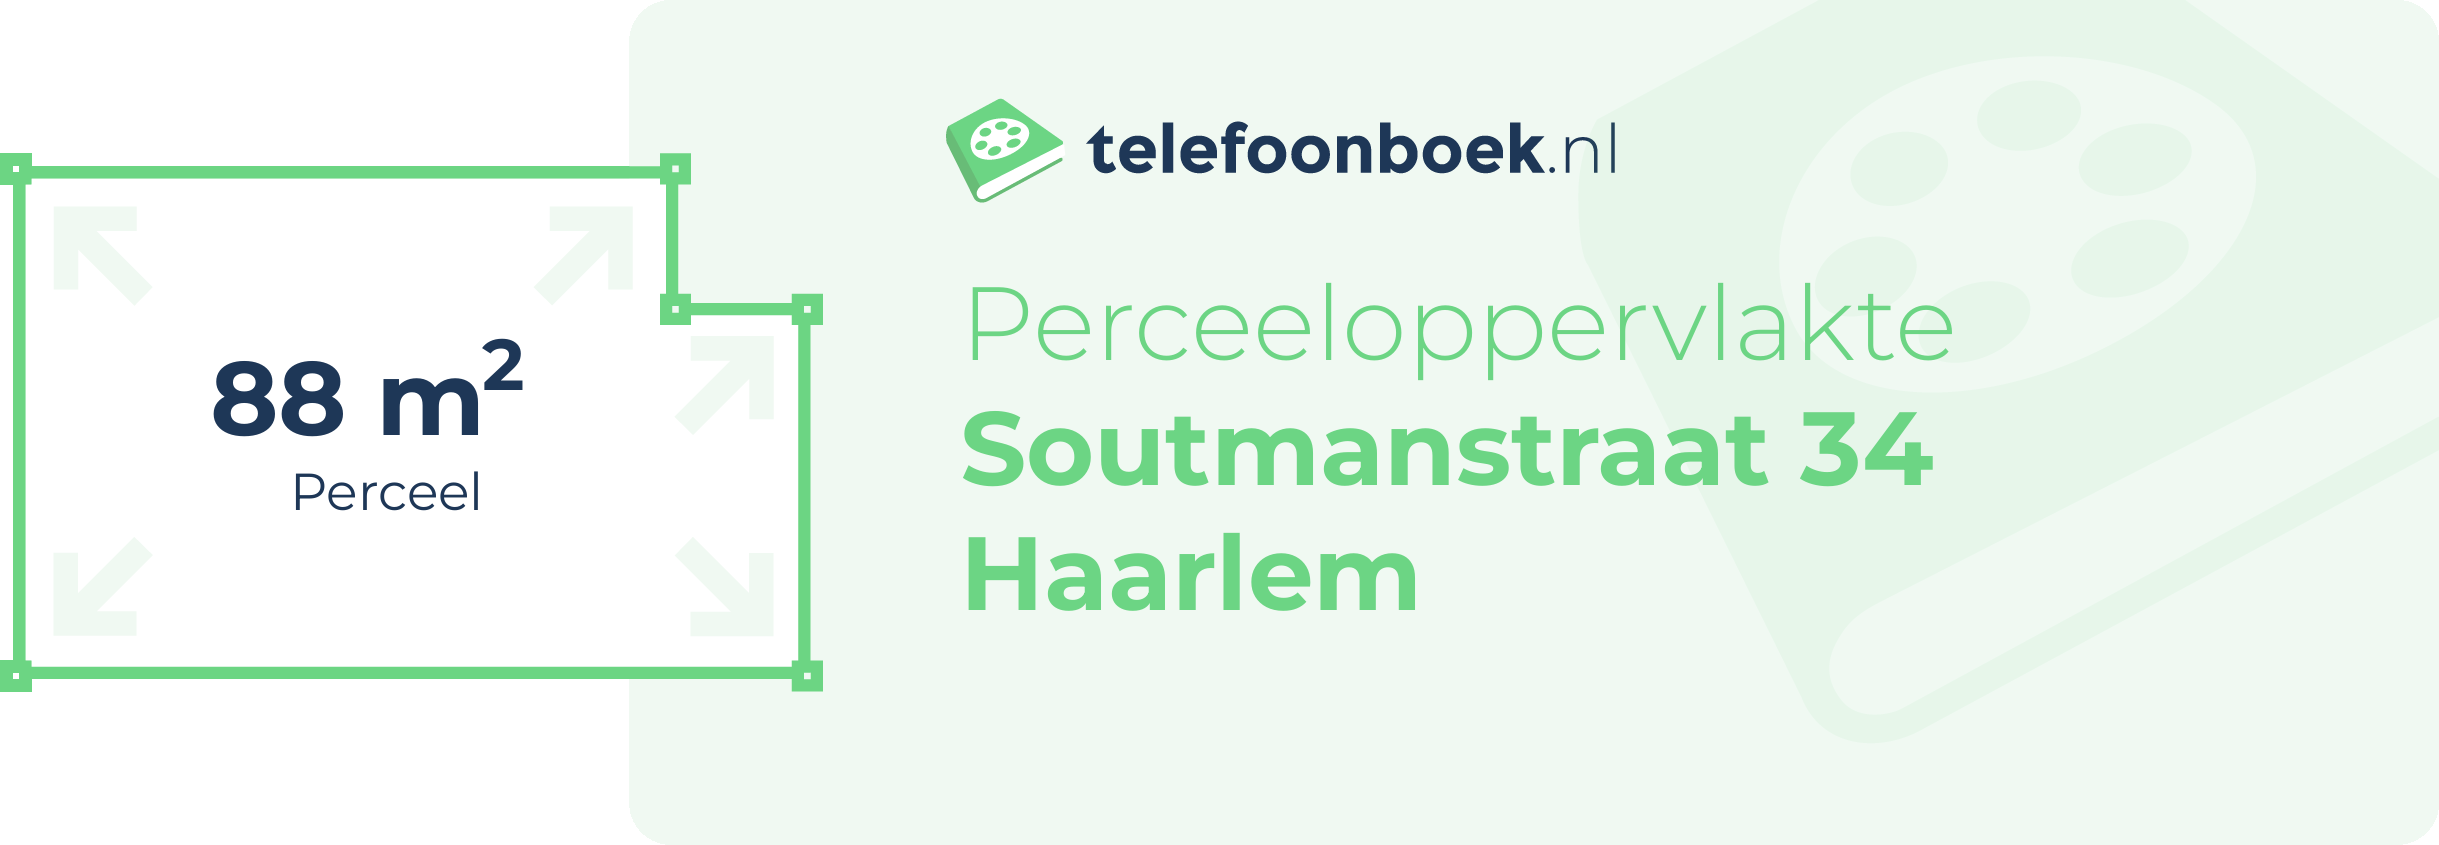 Perceeloppervlakte Soutmanstraat 34 Haarlem